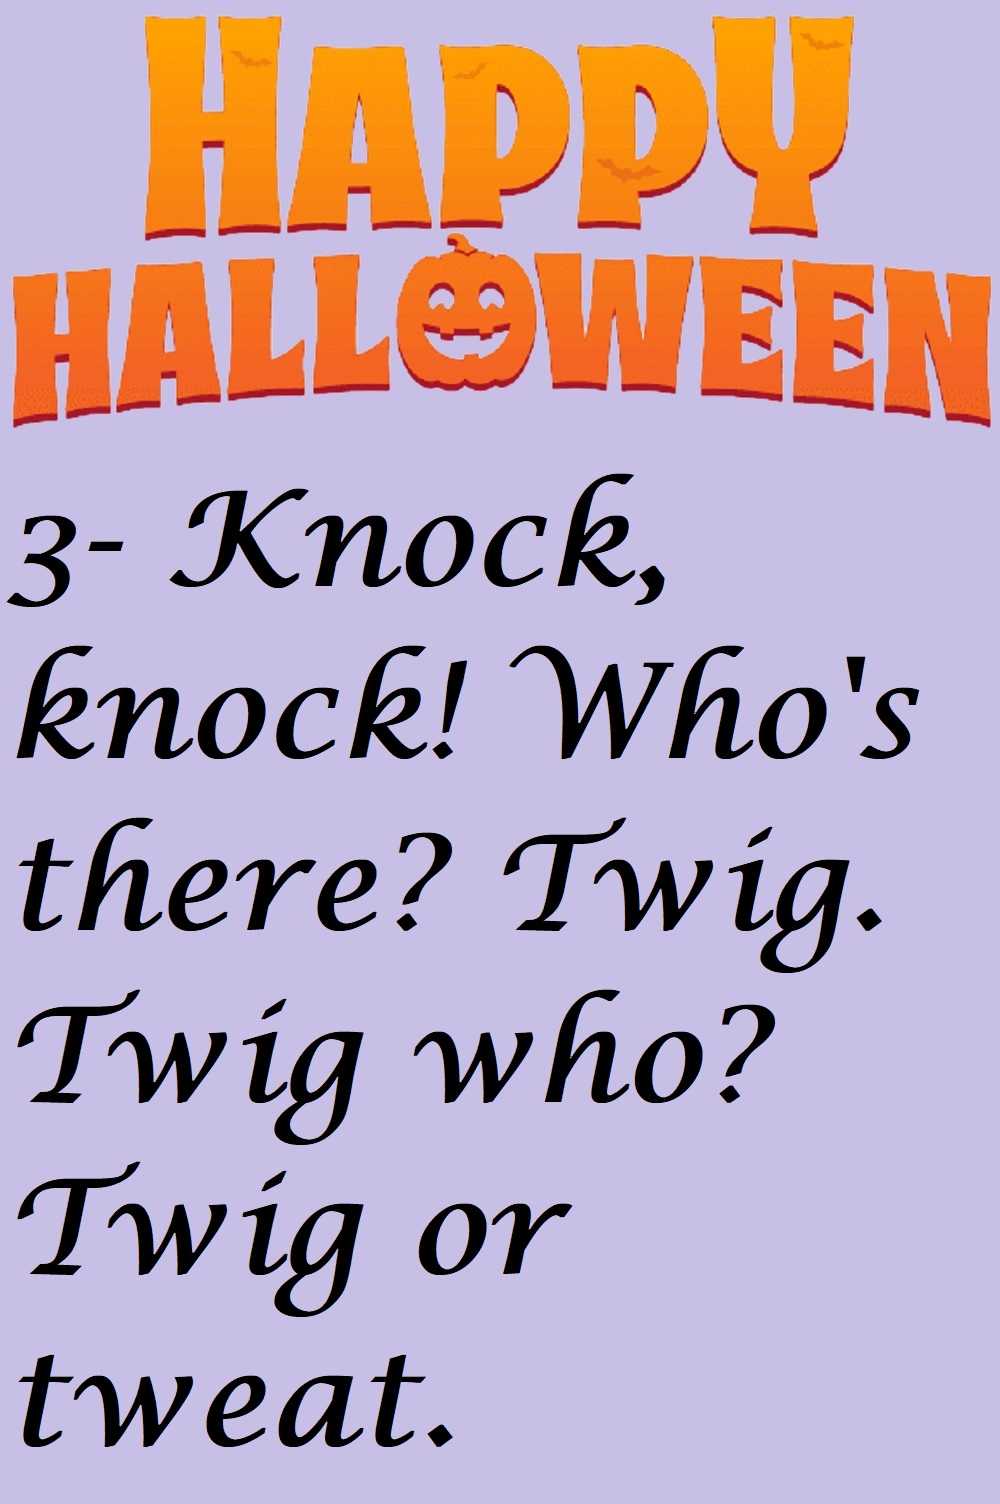 3 Halloween knock knock jokes - 17 Funny Halloween knock-knock Jokes For Kids And Adults